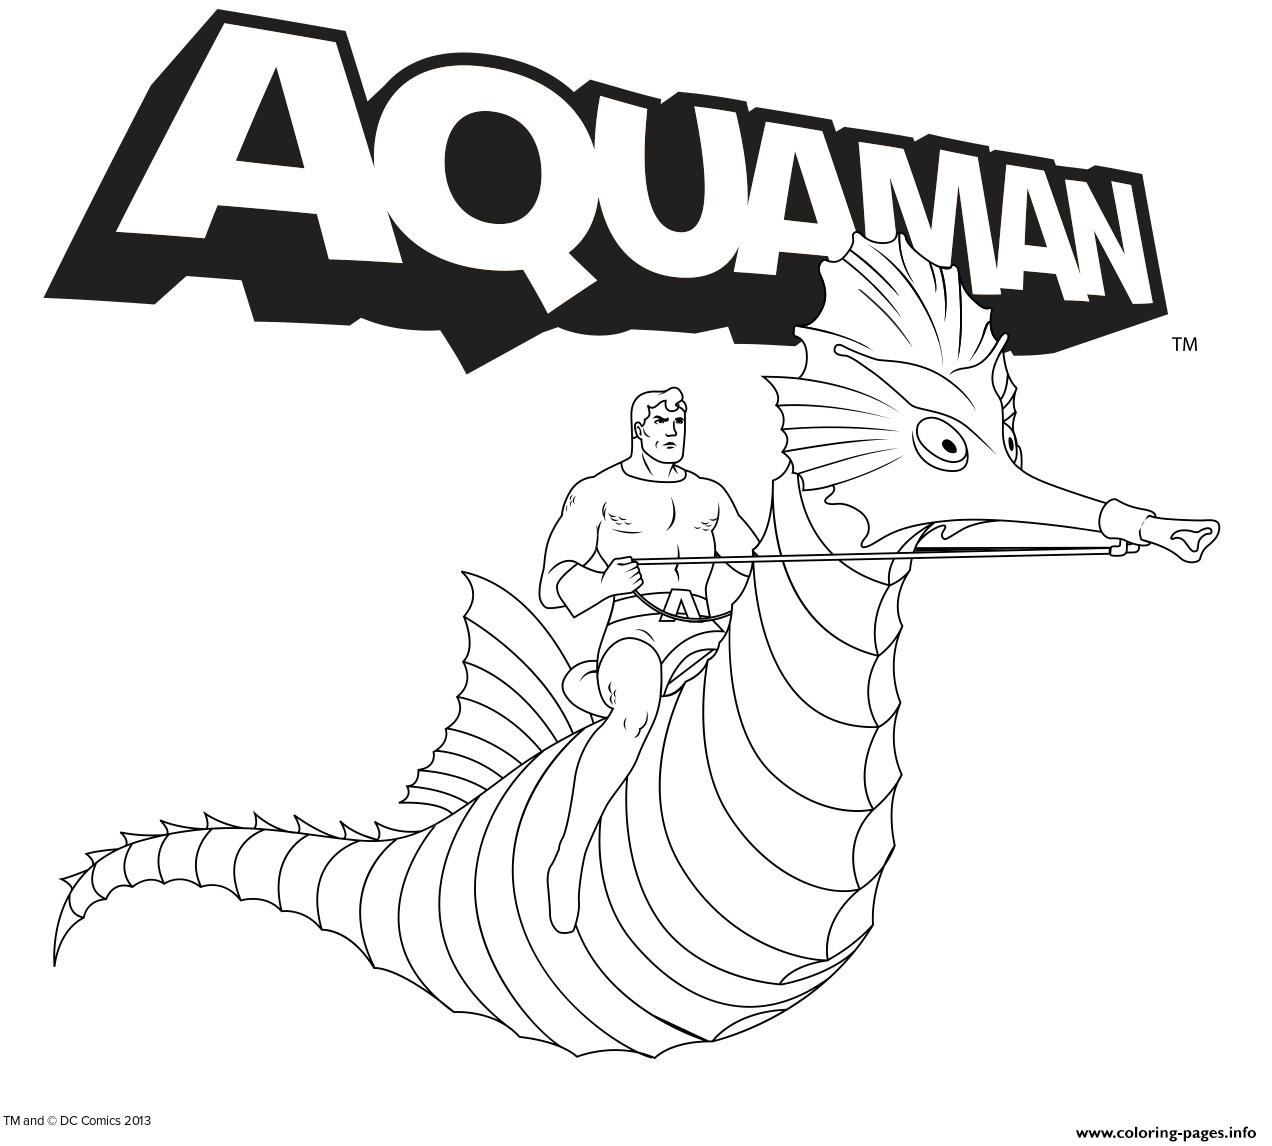 Aquaman On Animal coloring